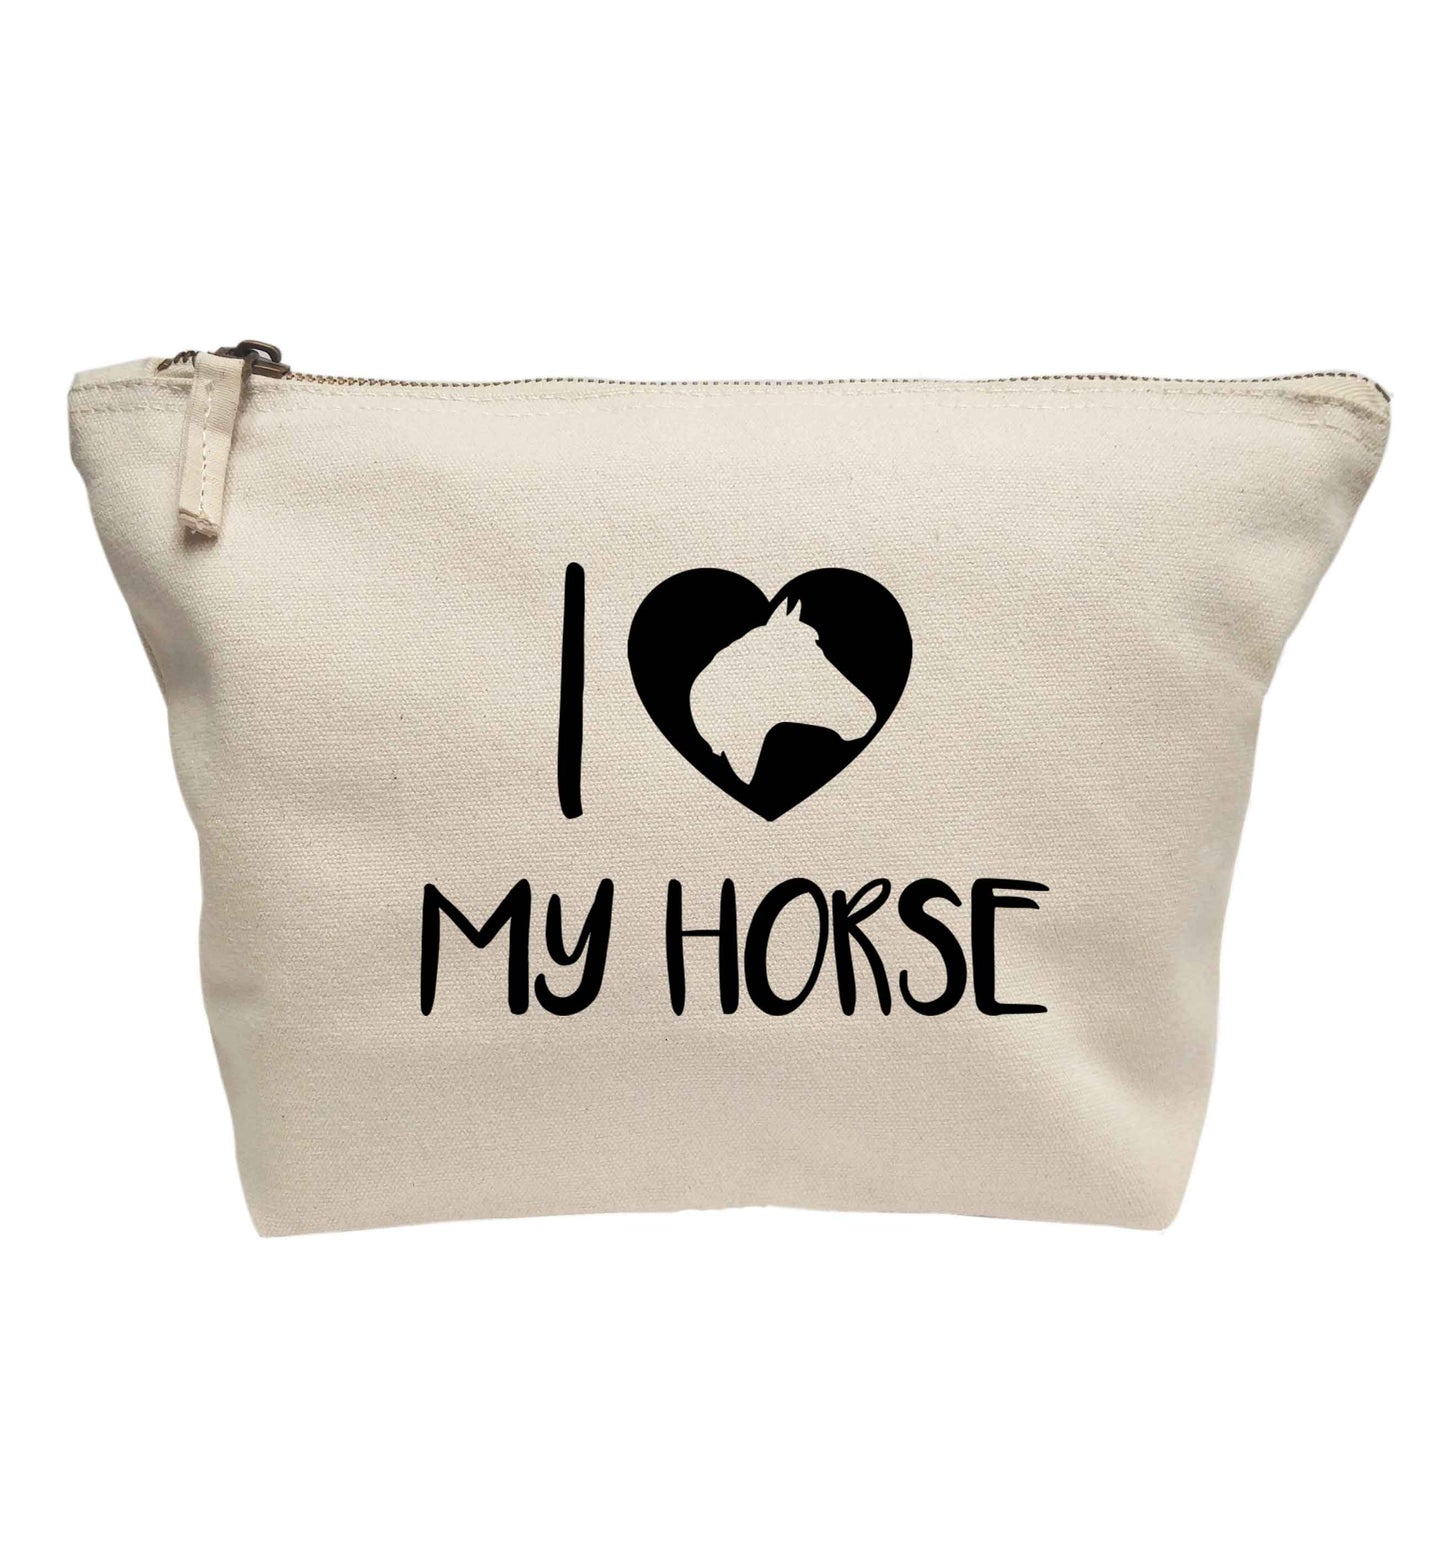 I love my horse | Makeup / wash bag